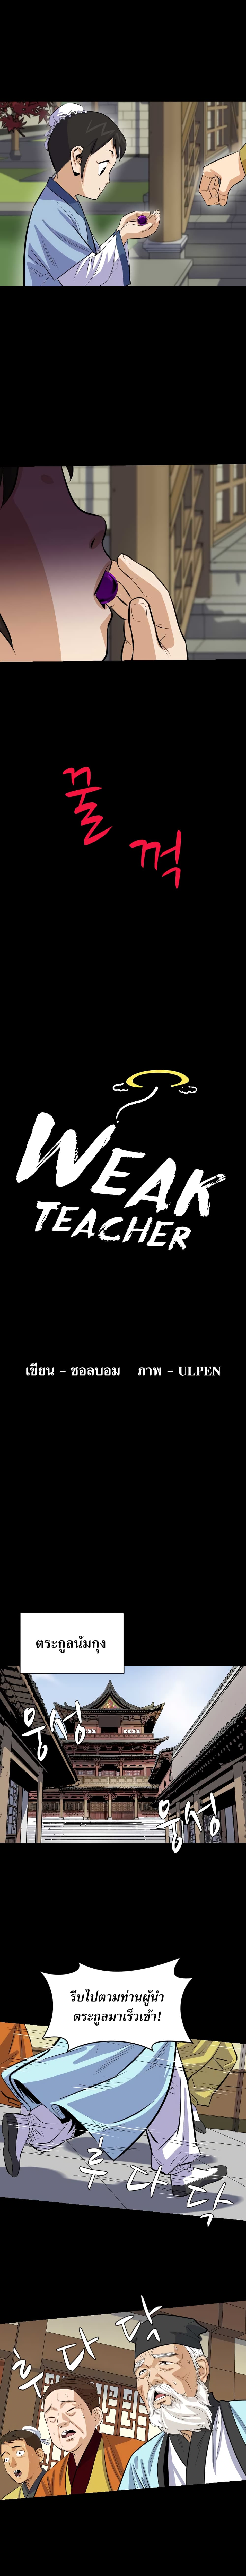 Weak-Teacher--4-3.jpg